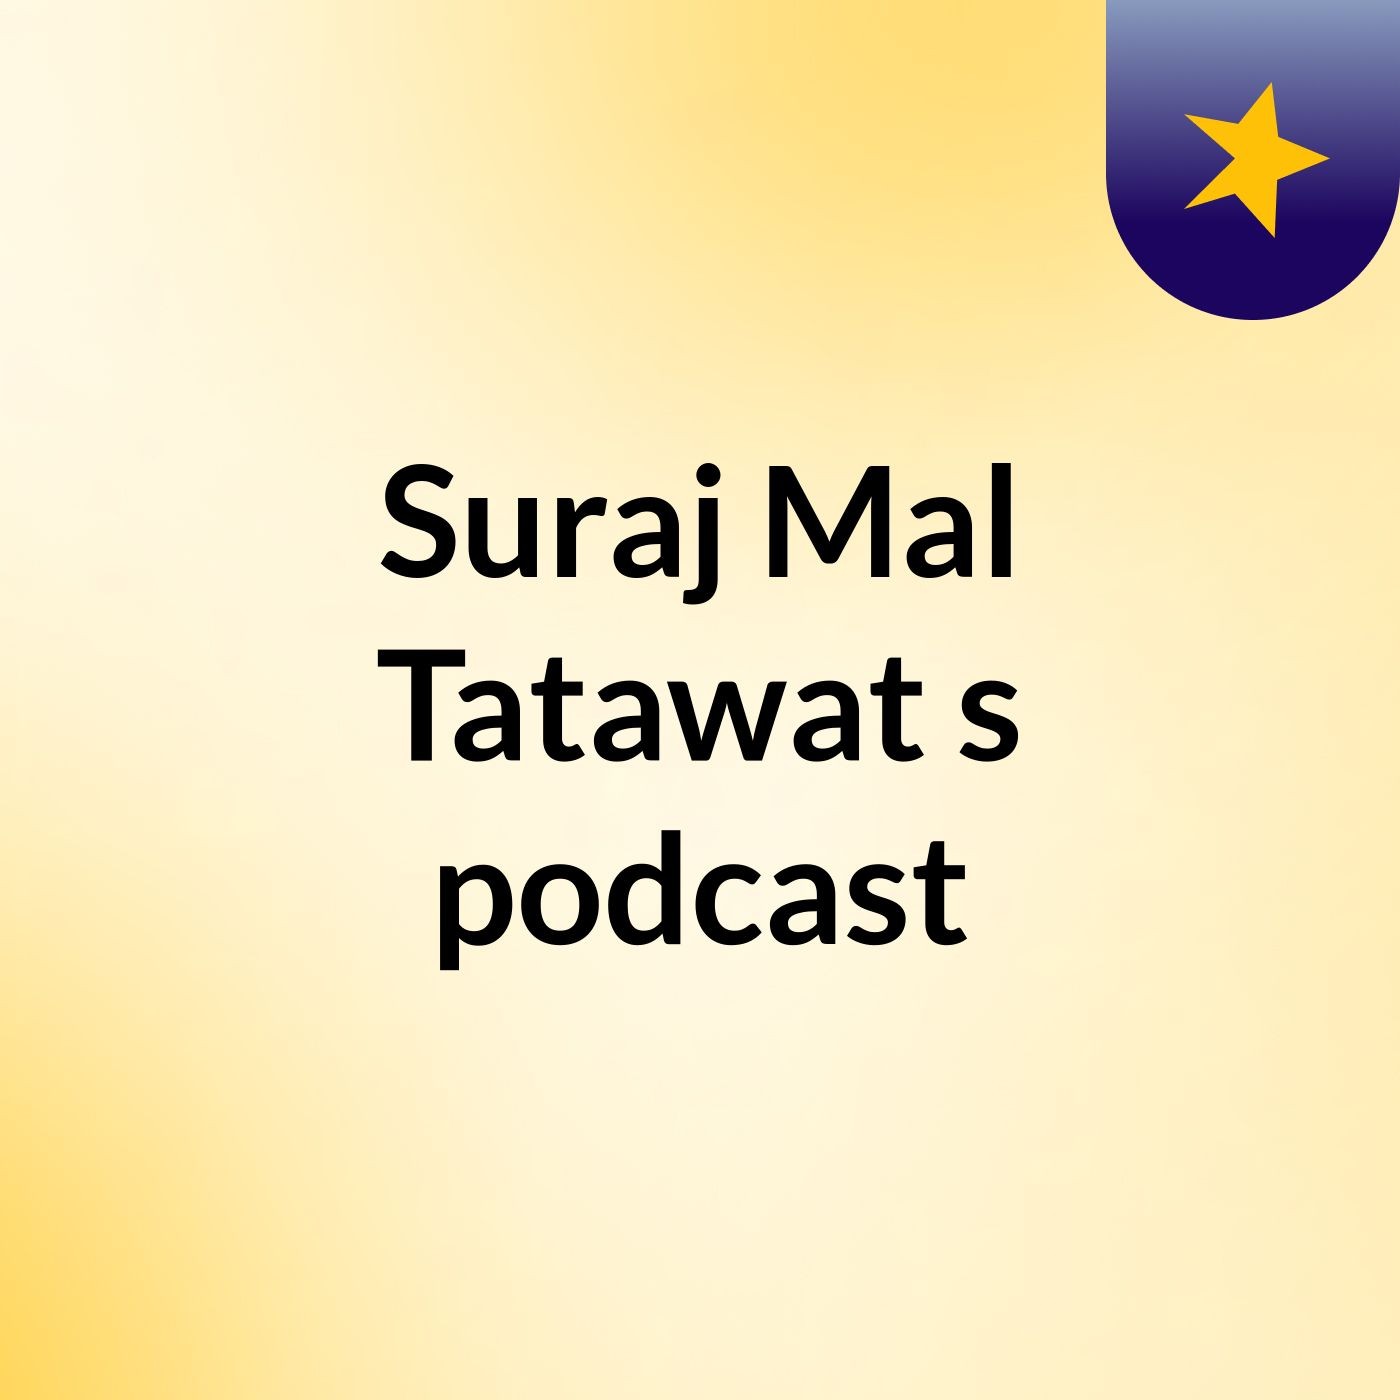 Episode 2 - Suraj Mal Tatawat's podcast